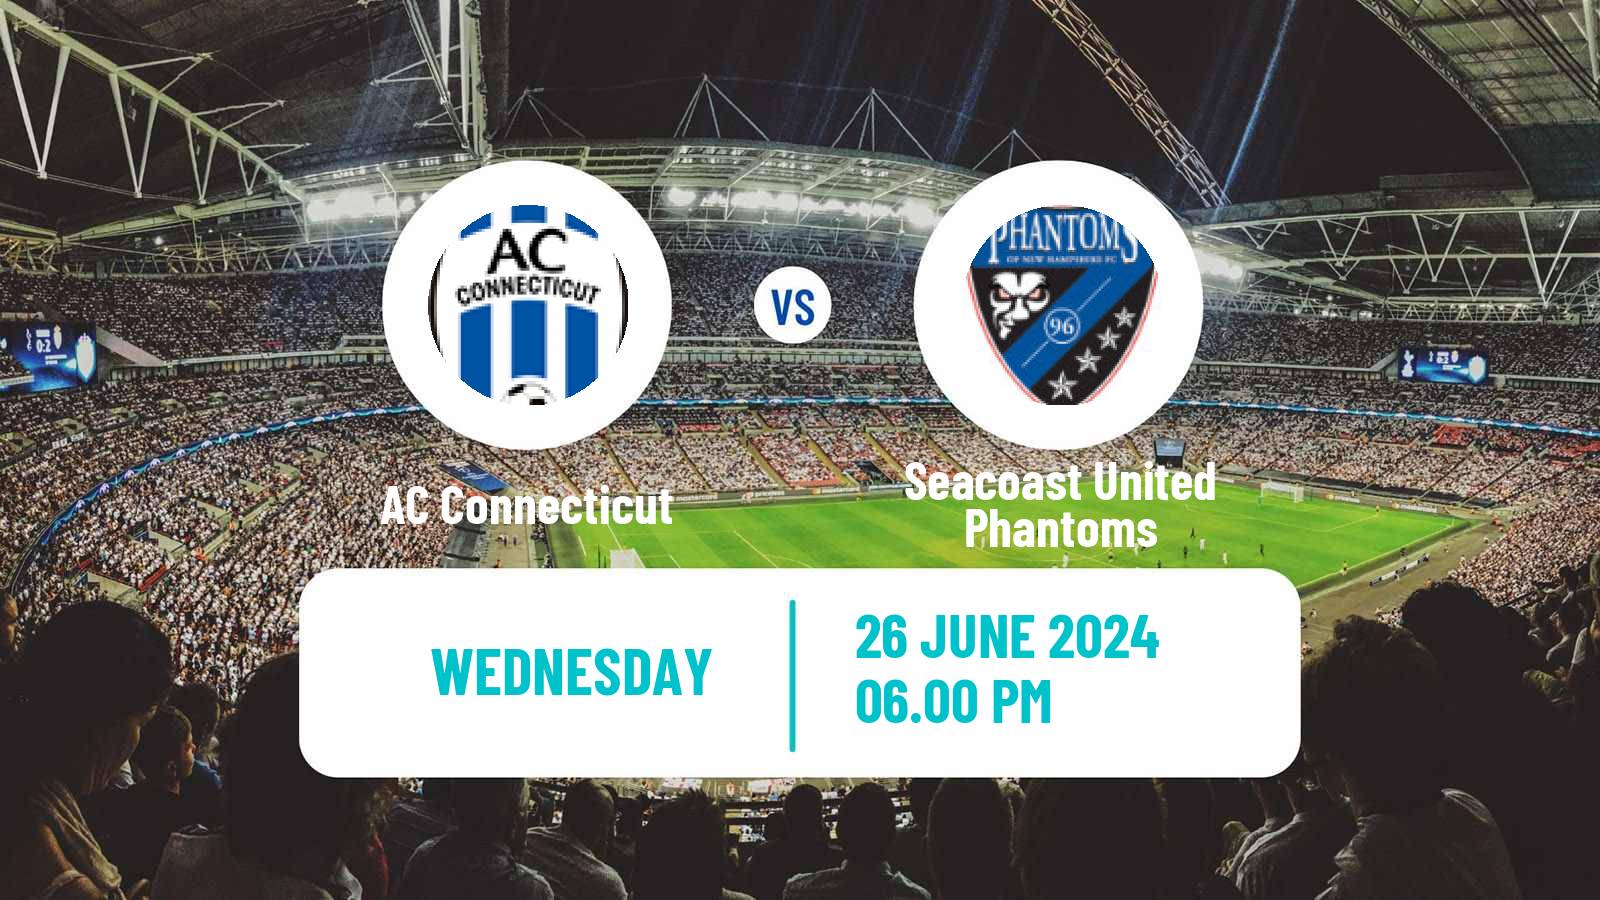 Soccer USL League Two AC Connecticut - Seacoast United Phantoms